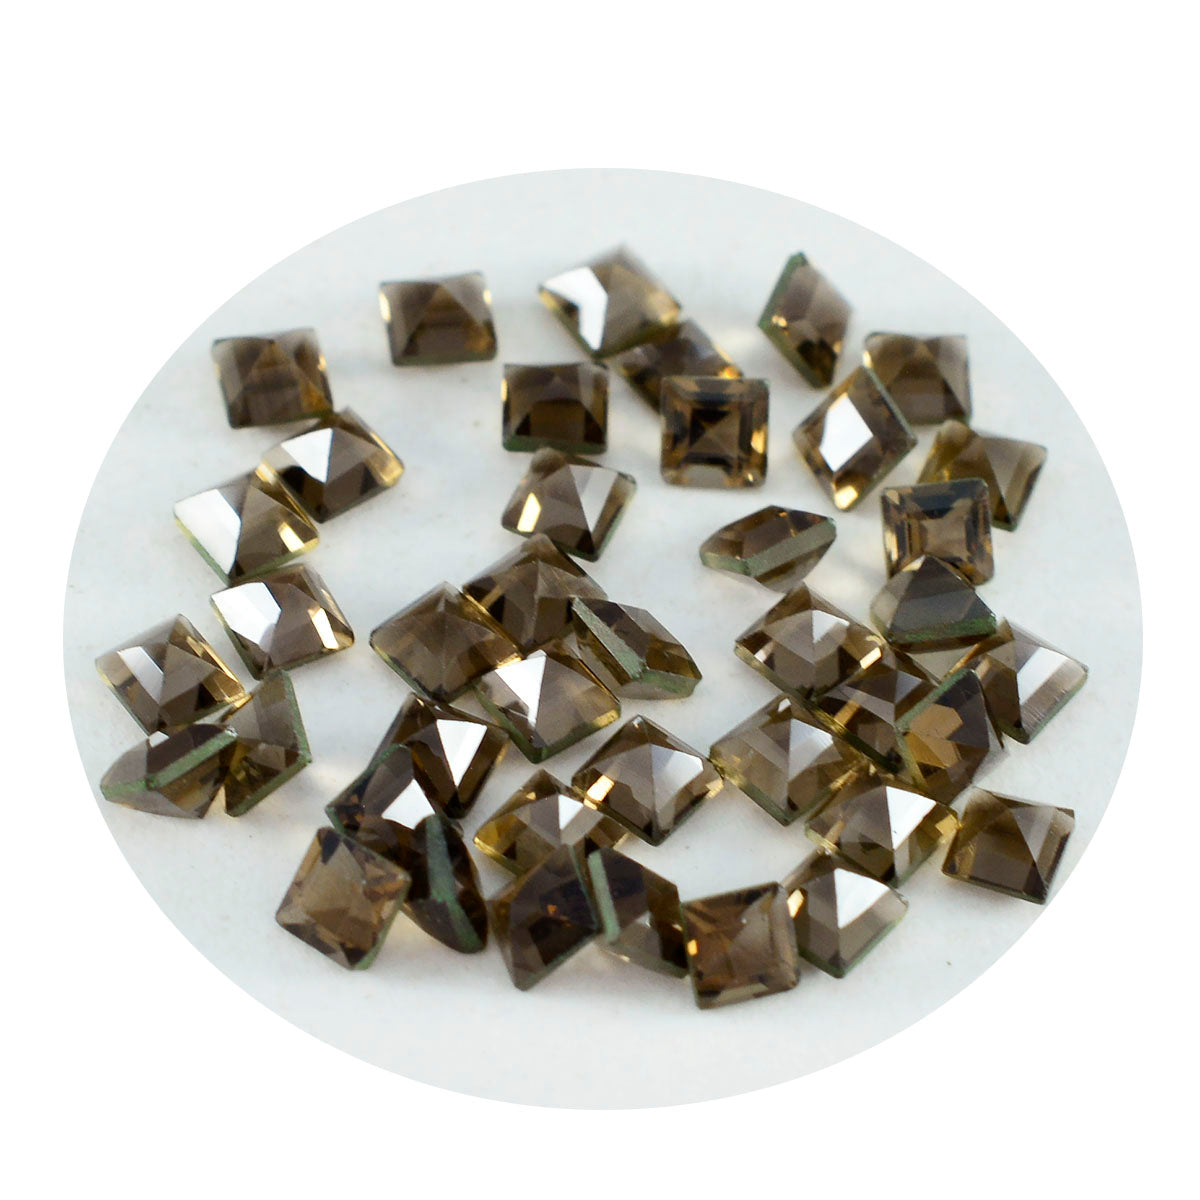 Riyogems 1PC Genuine Brown Smoky Quartz Faceted 2x2 mm Square Shape lovely Quality Gems